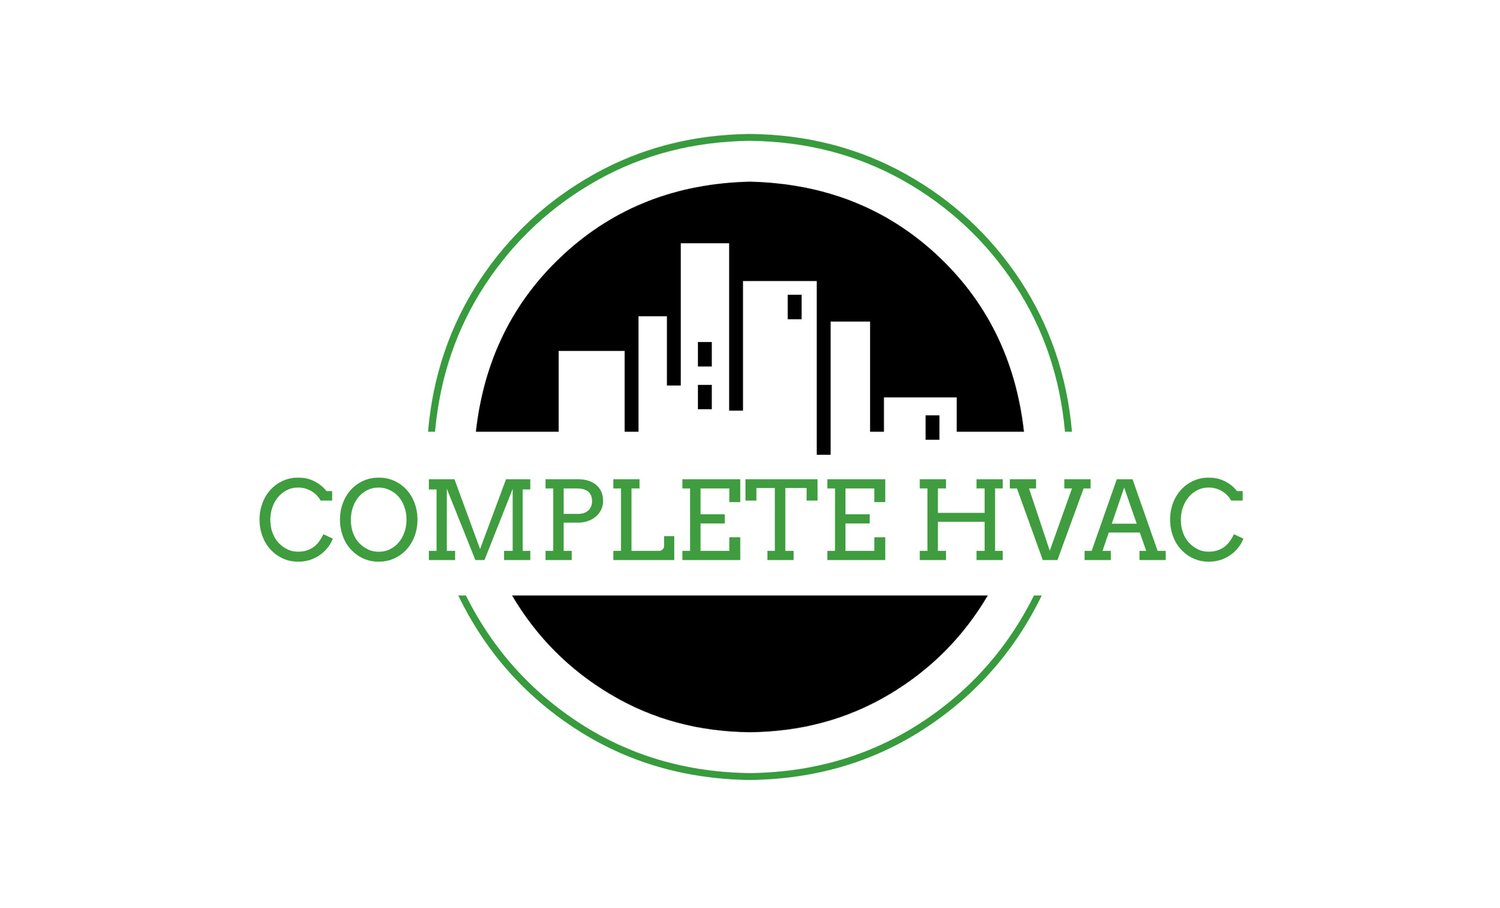 Complete HVAC